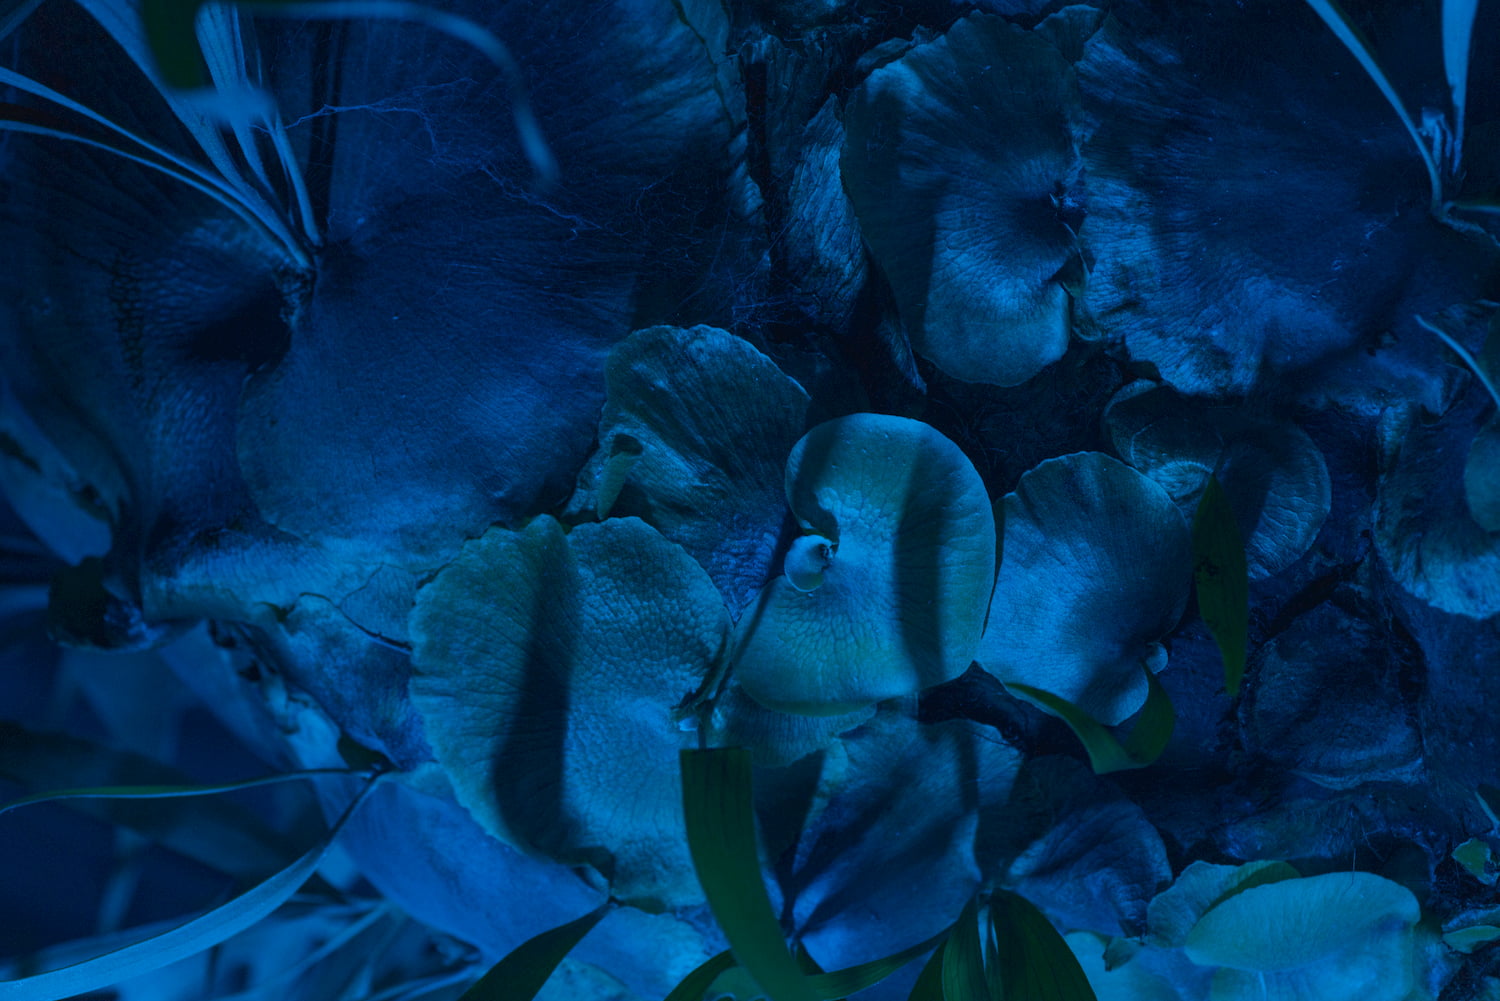 An up close, dark blue-tinged photo of hydrangeas